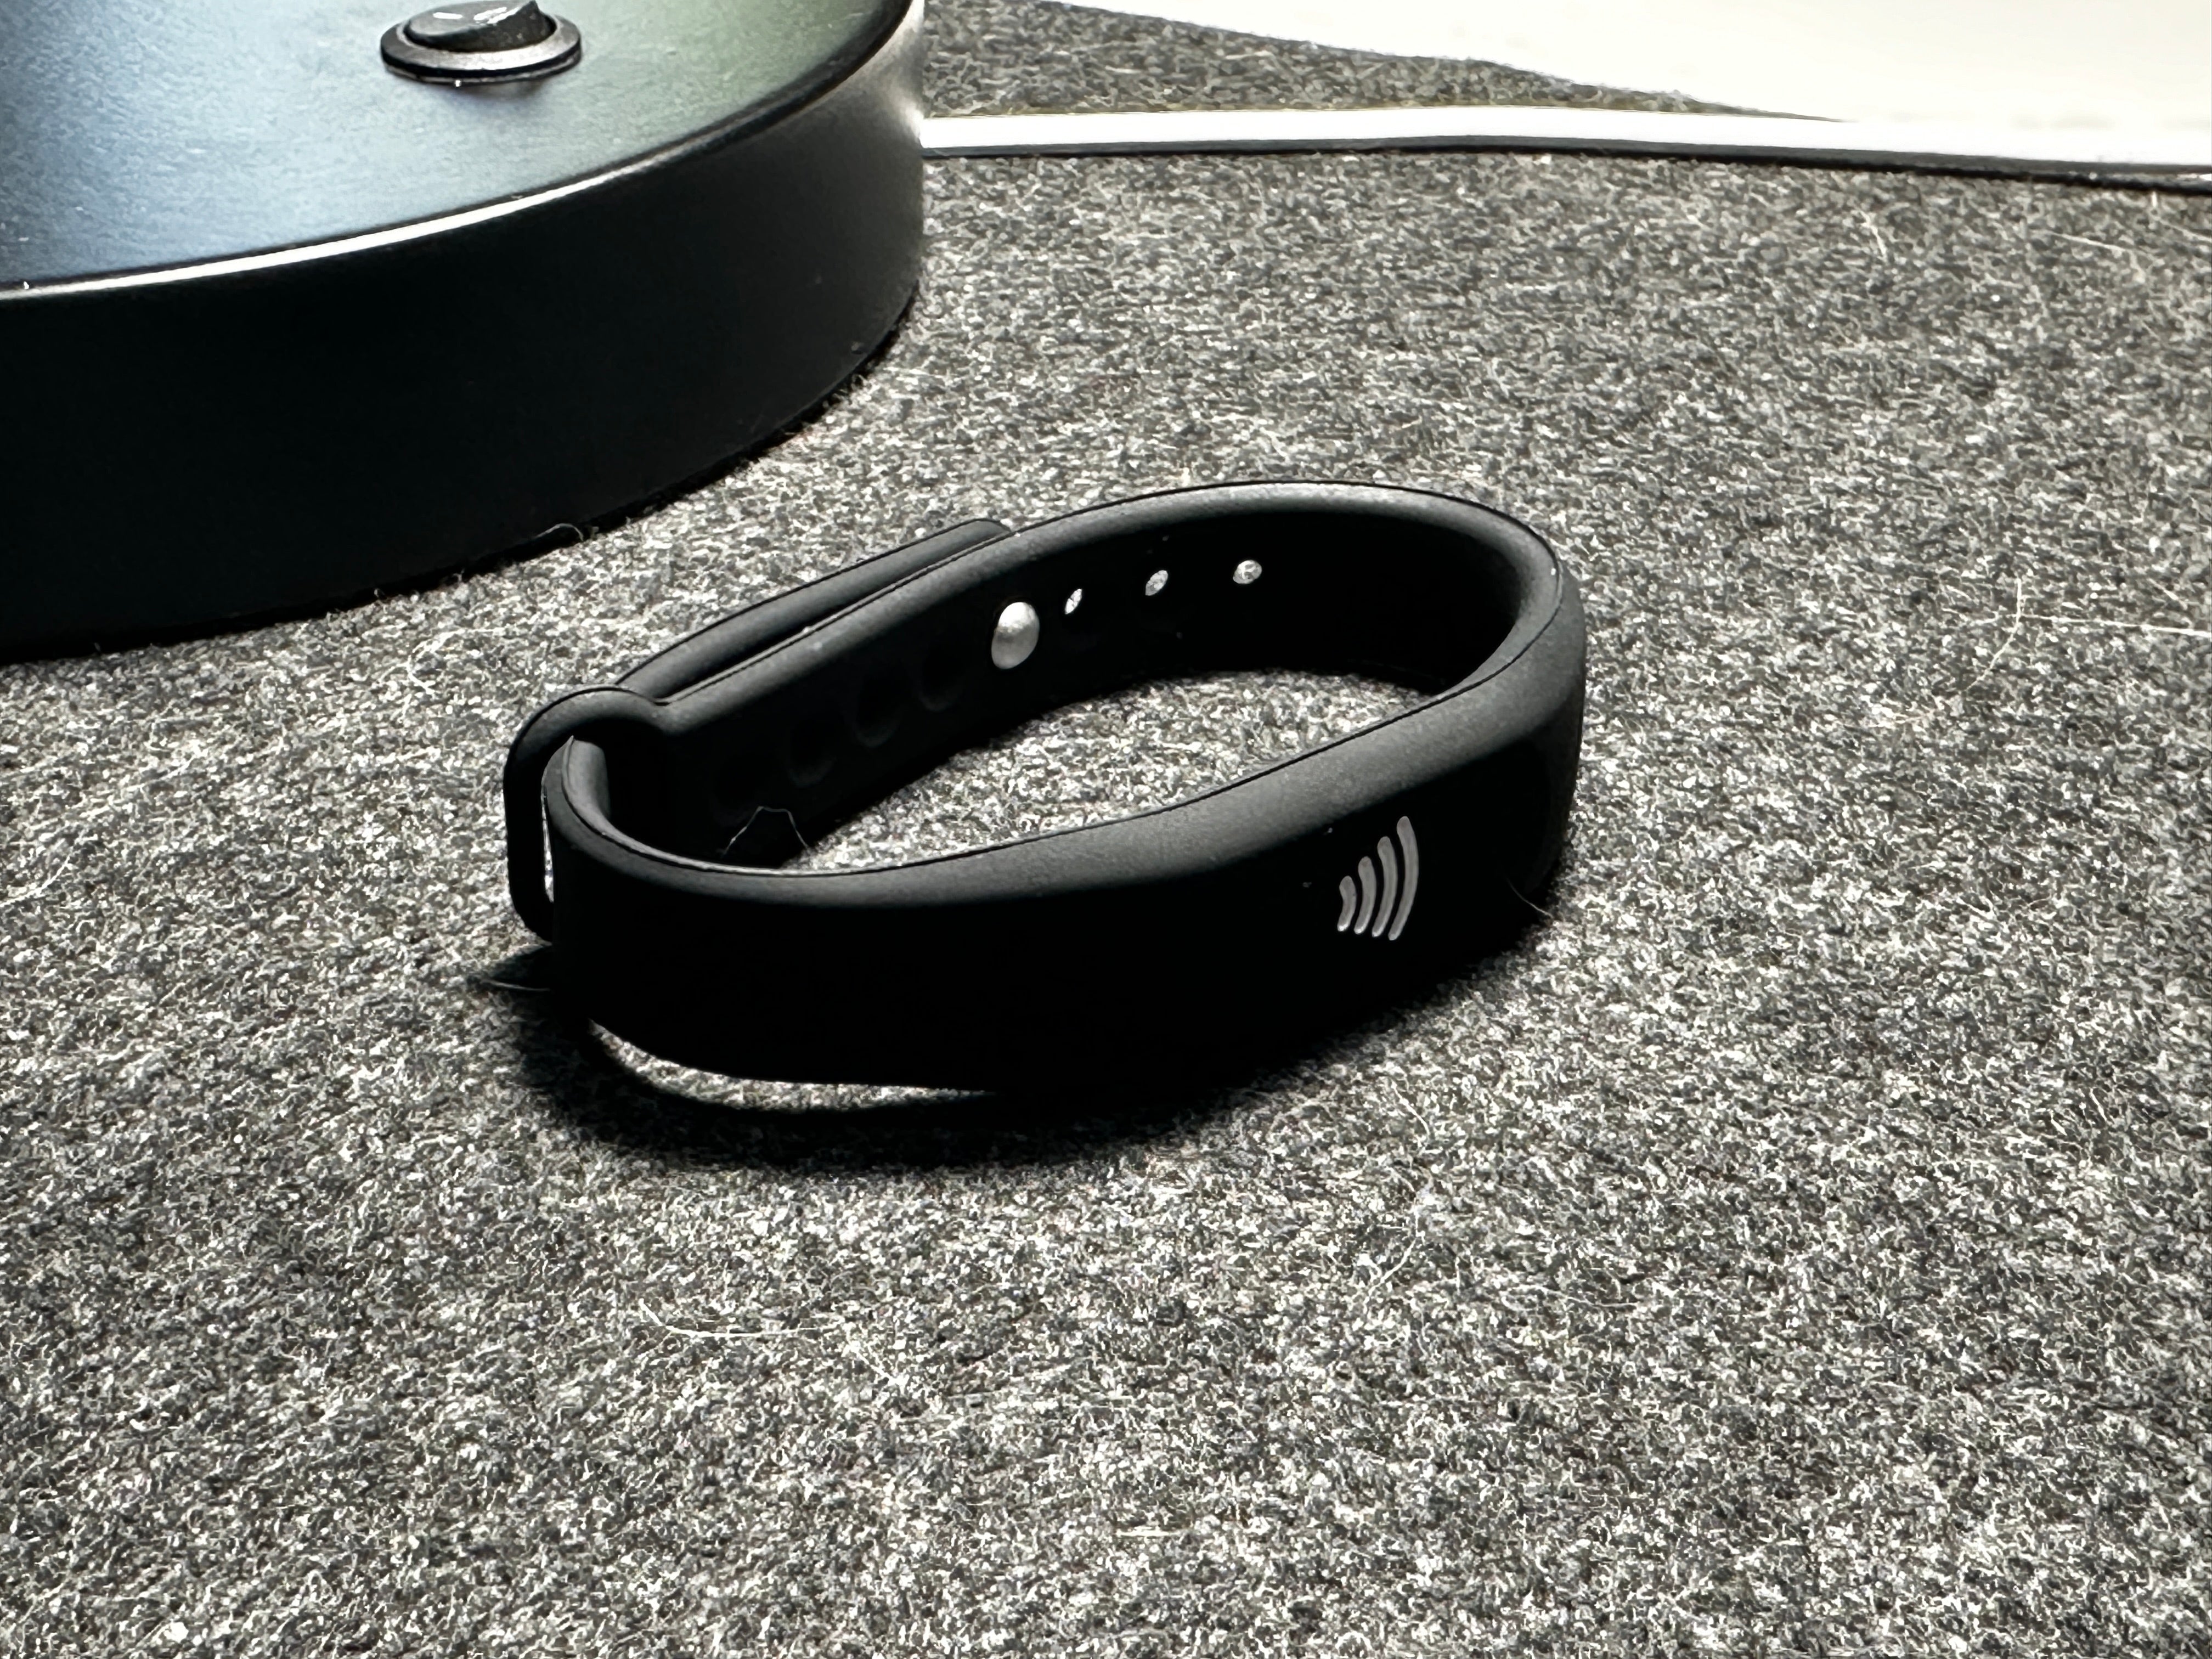 Silicone Minimalist Tap Wristband